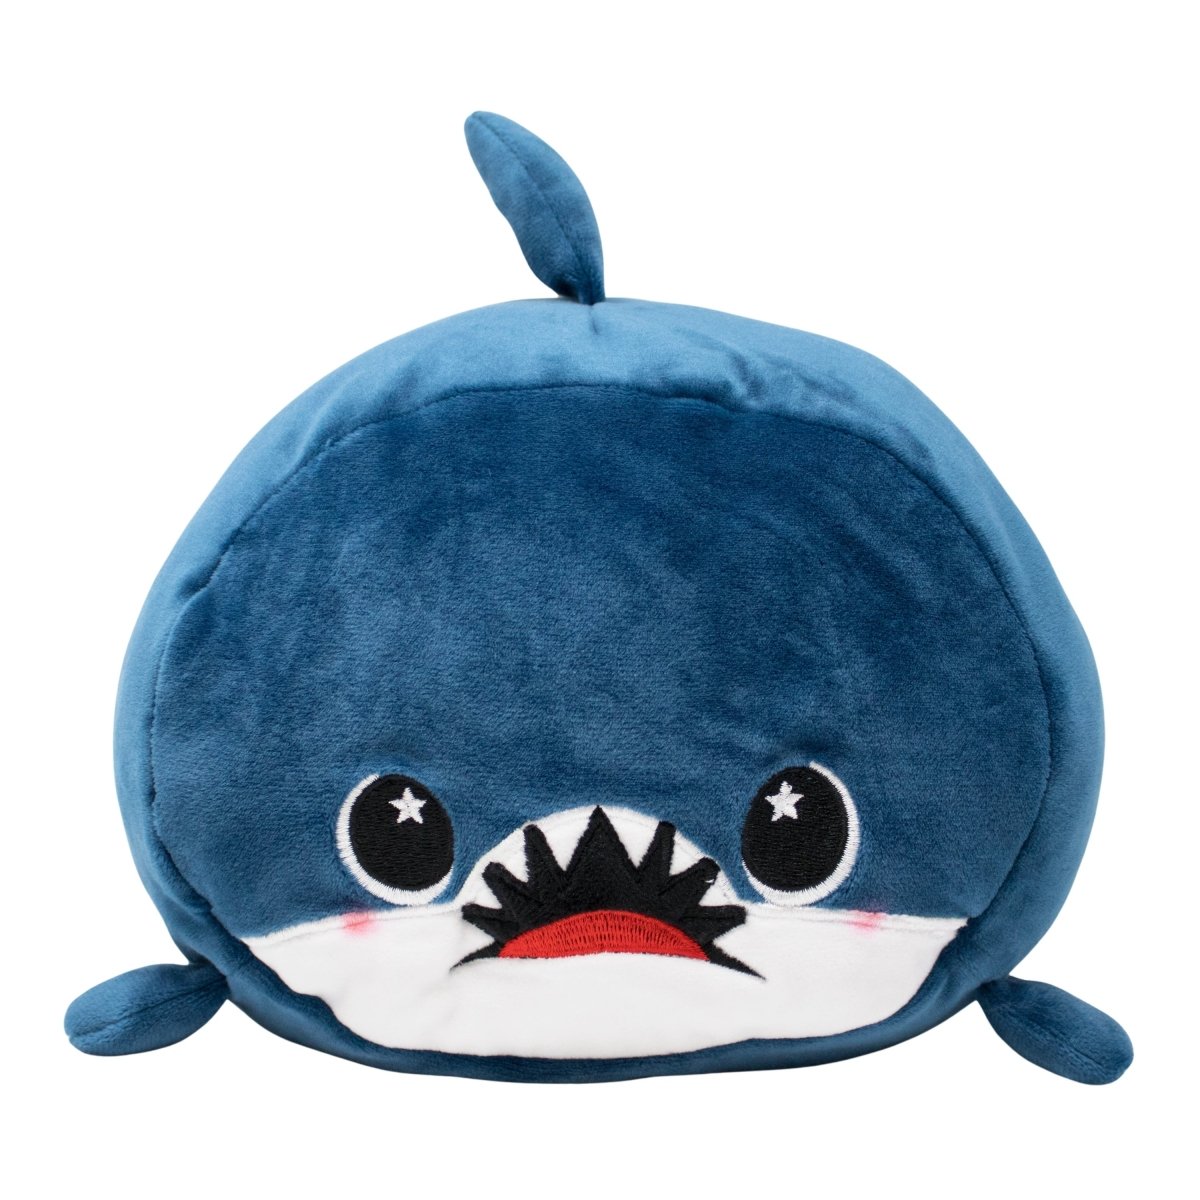 Blue shark stuffed animal